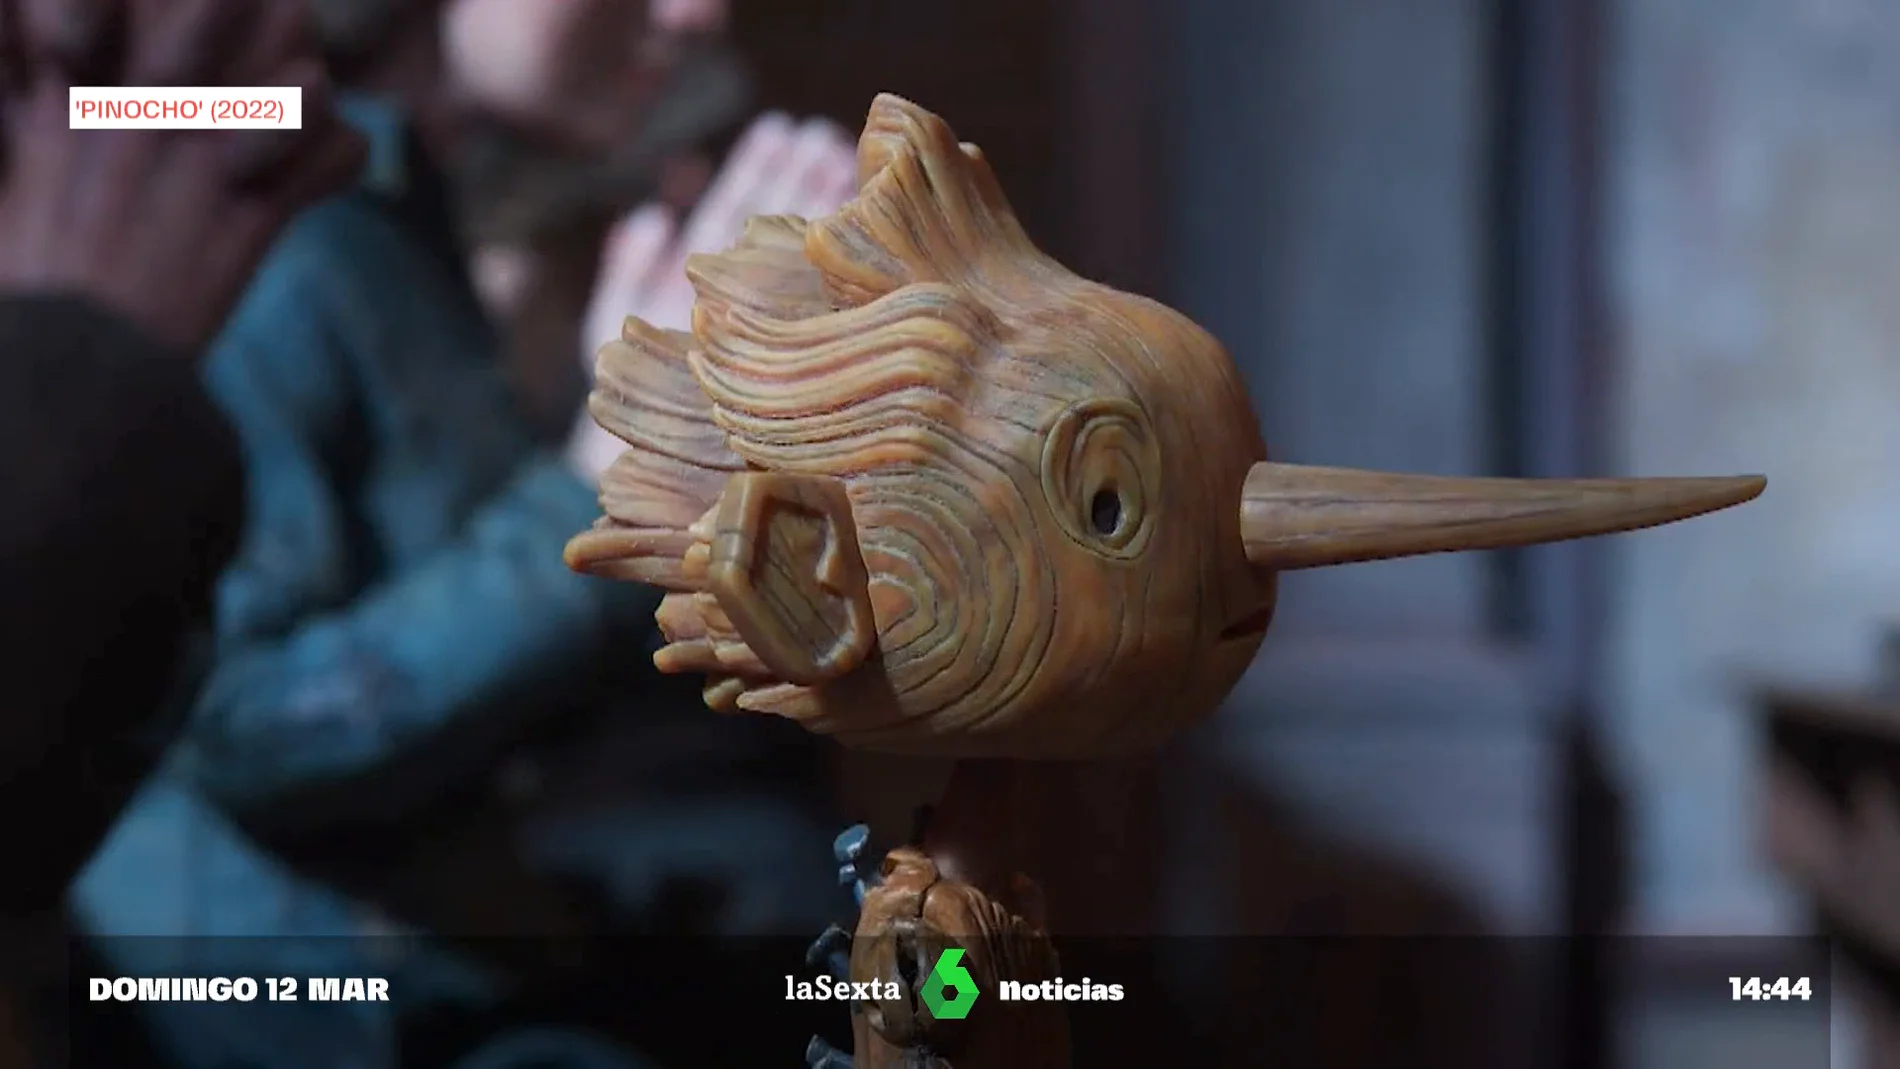 Stop-motion, la técnica que da vida al 'Pinocho' de Guillermo del Toro